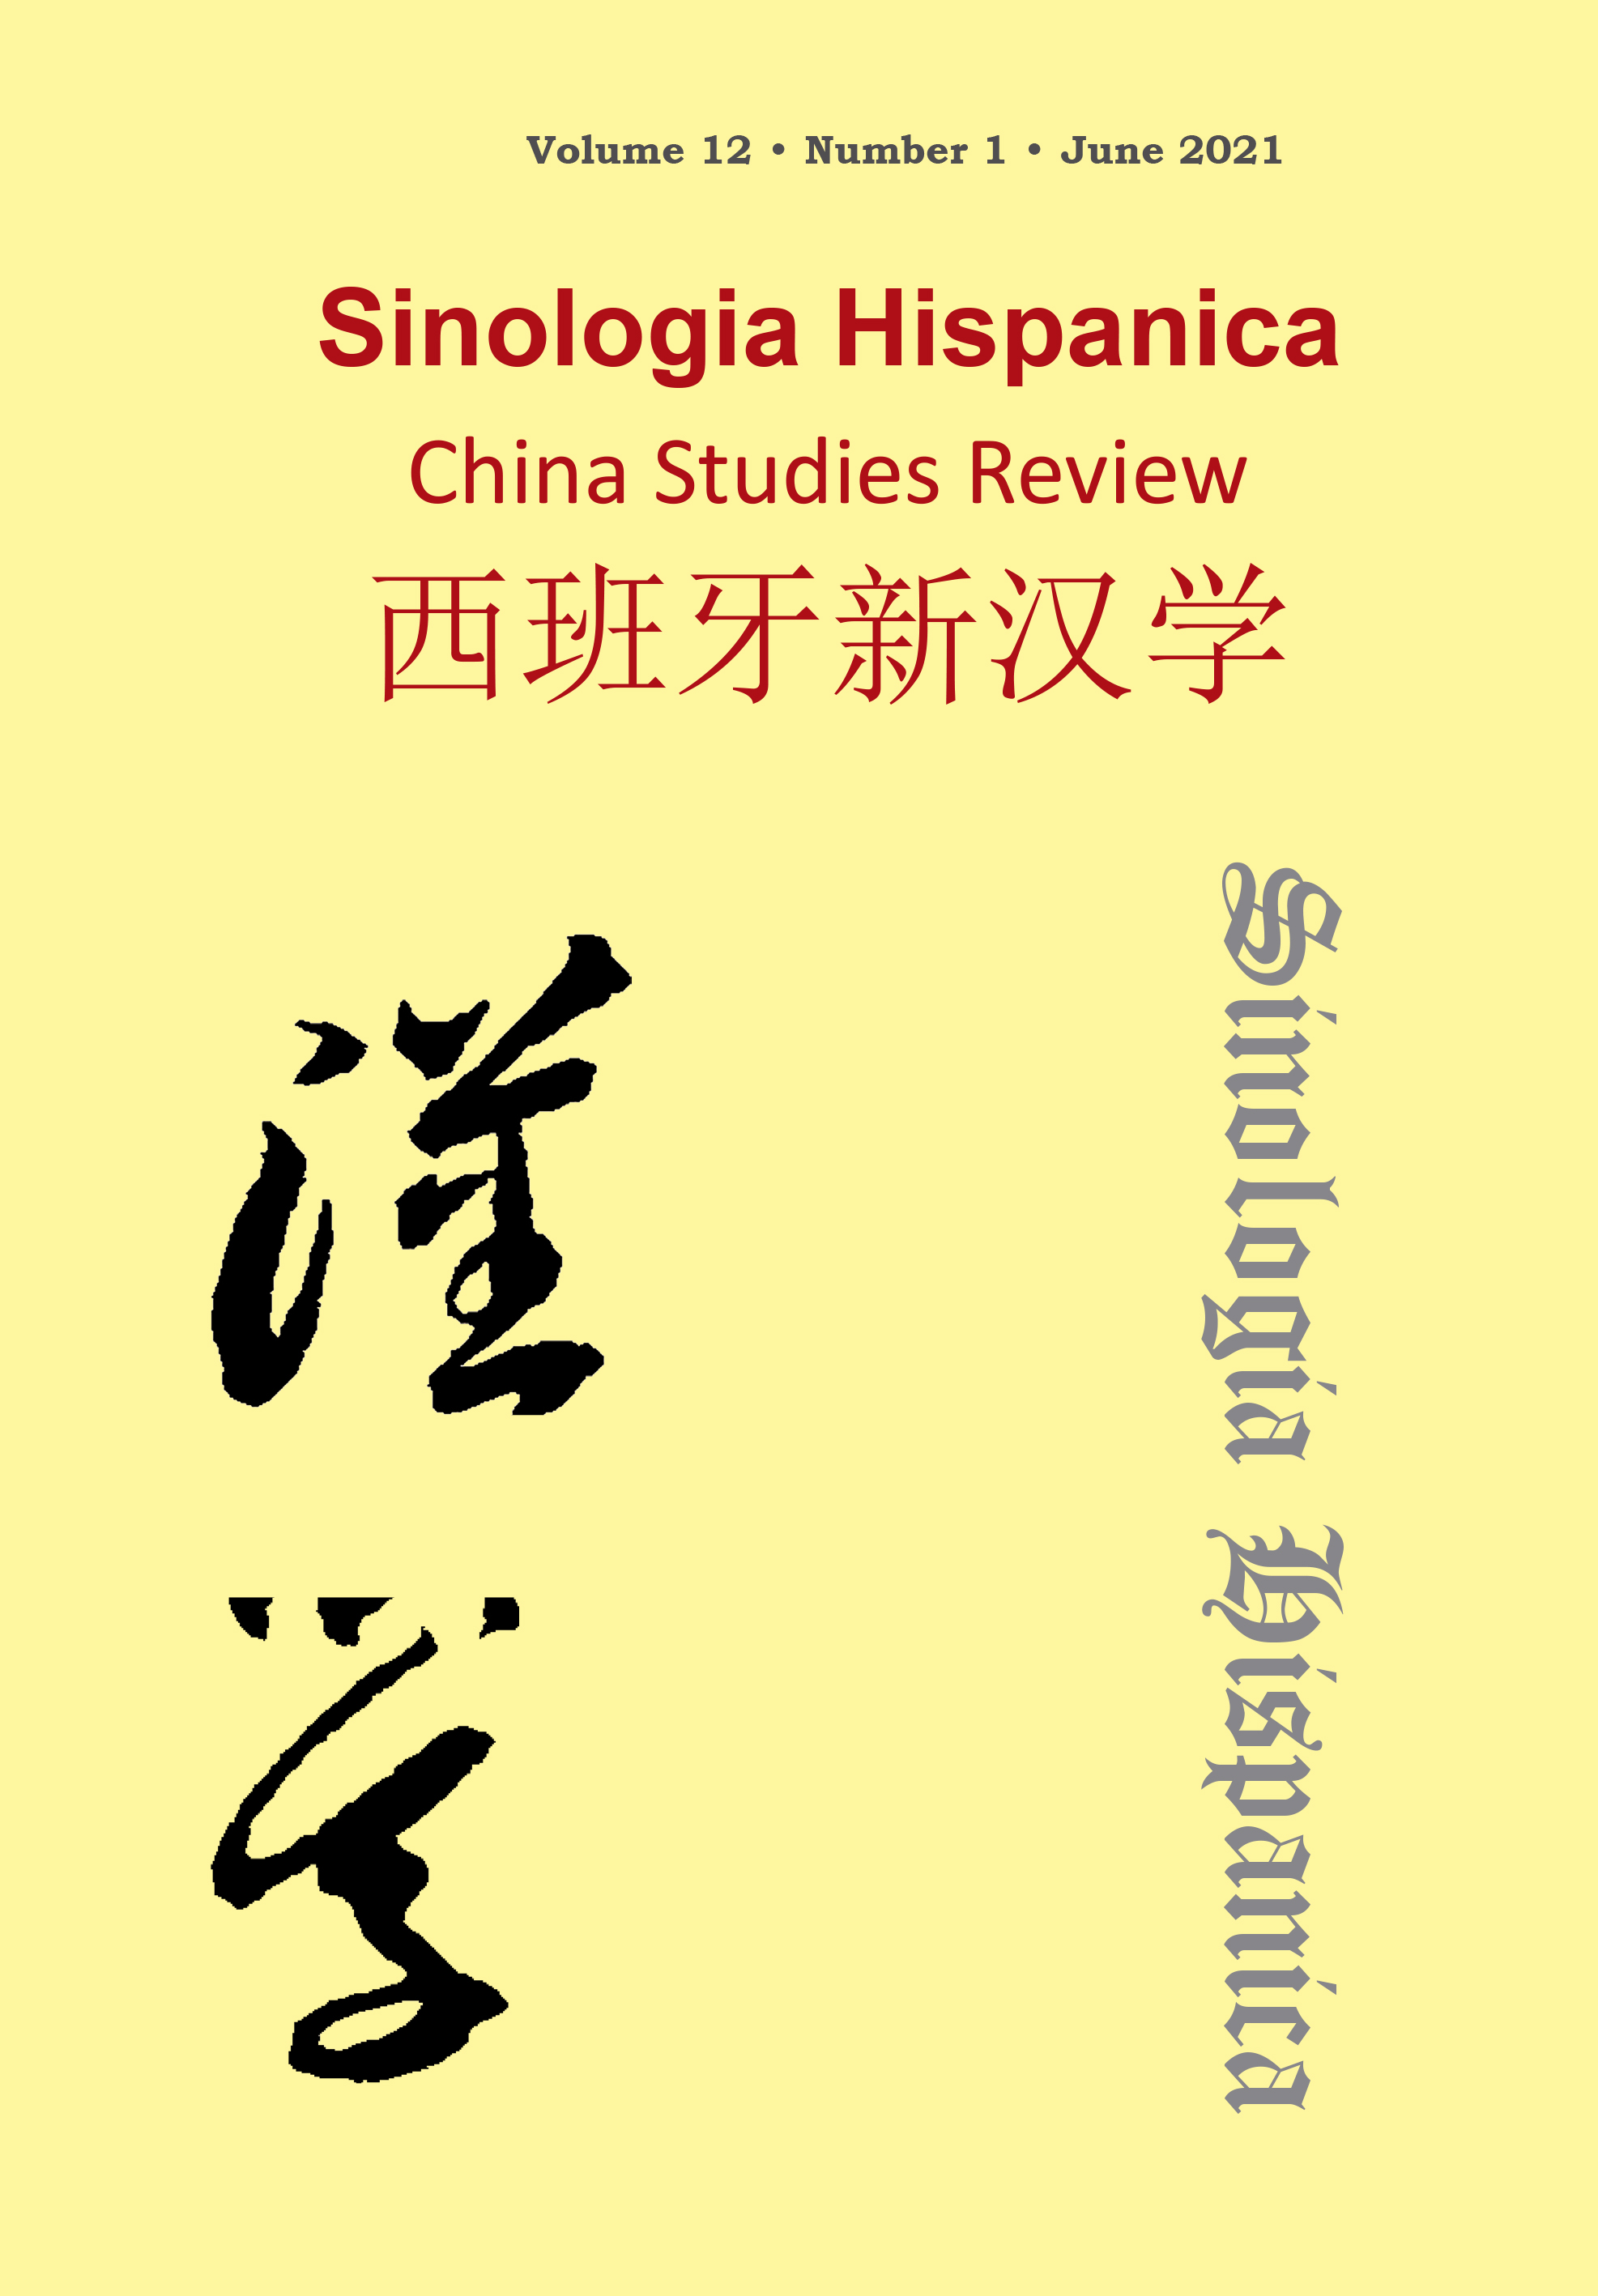 					View Vol. 12 No. 1 (2021): Sinologia Hispanica China Studies Review
				